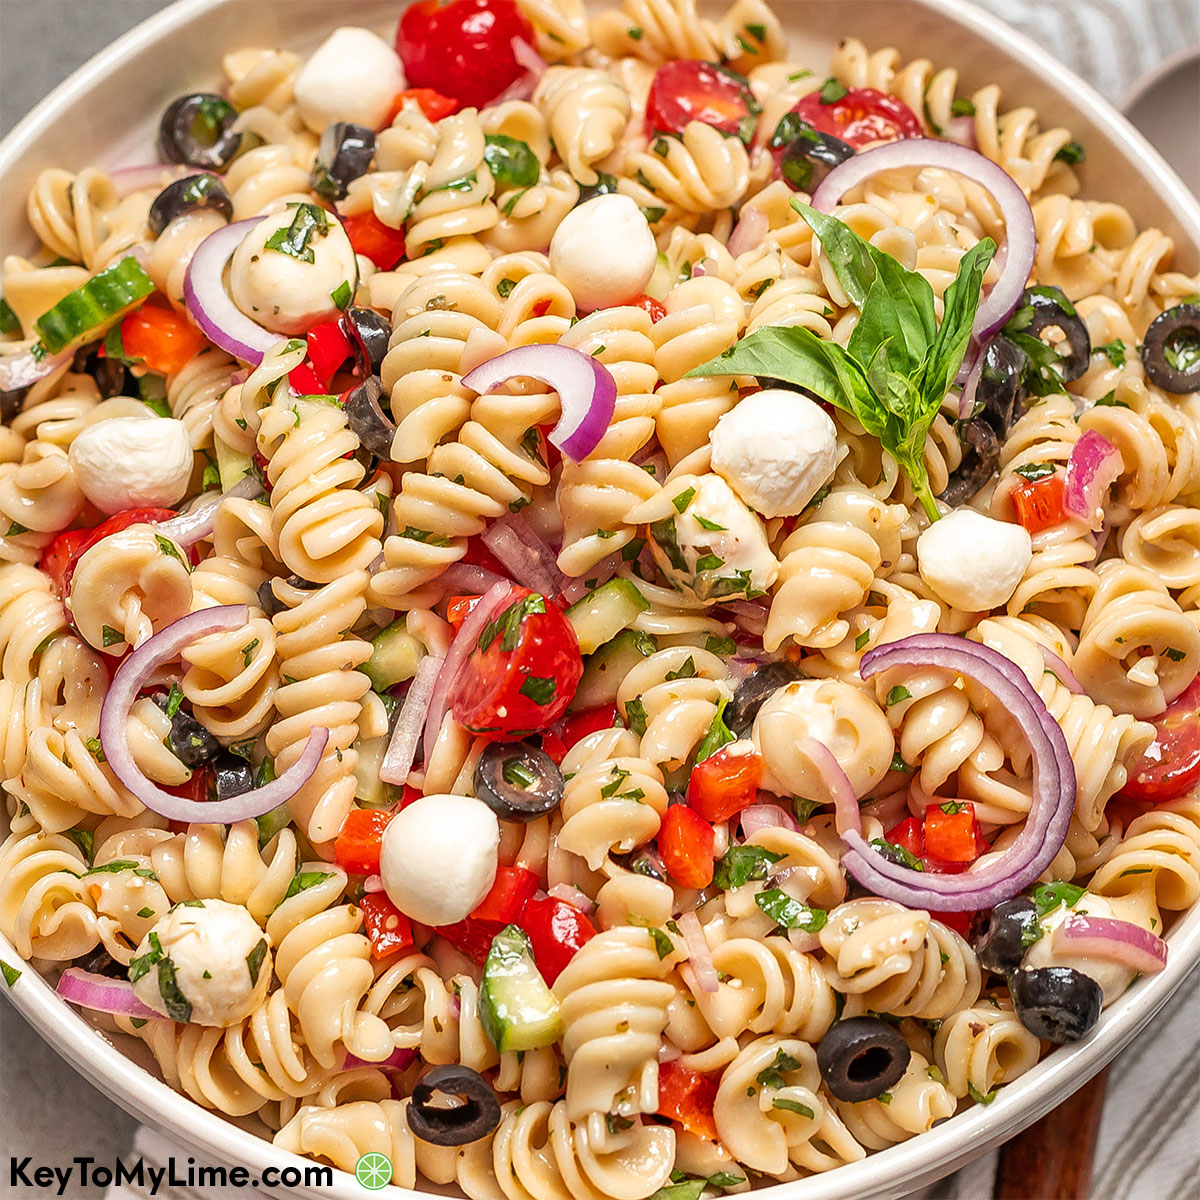 The best pasta salad with italian dressing recipe.